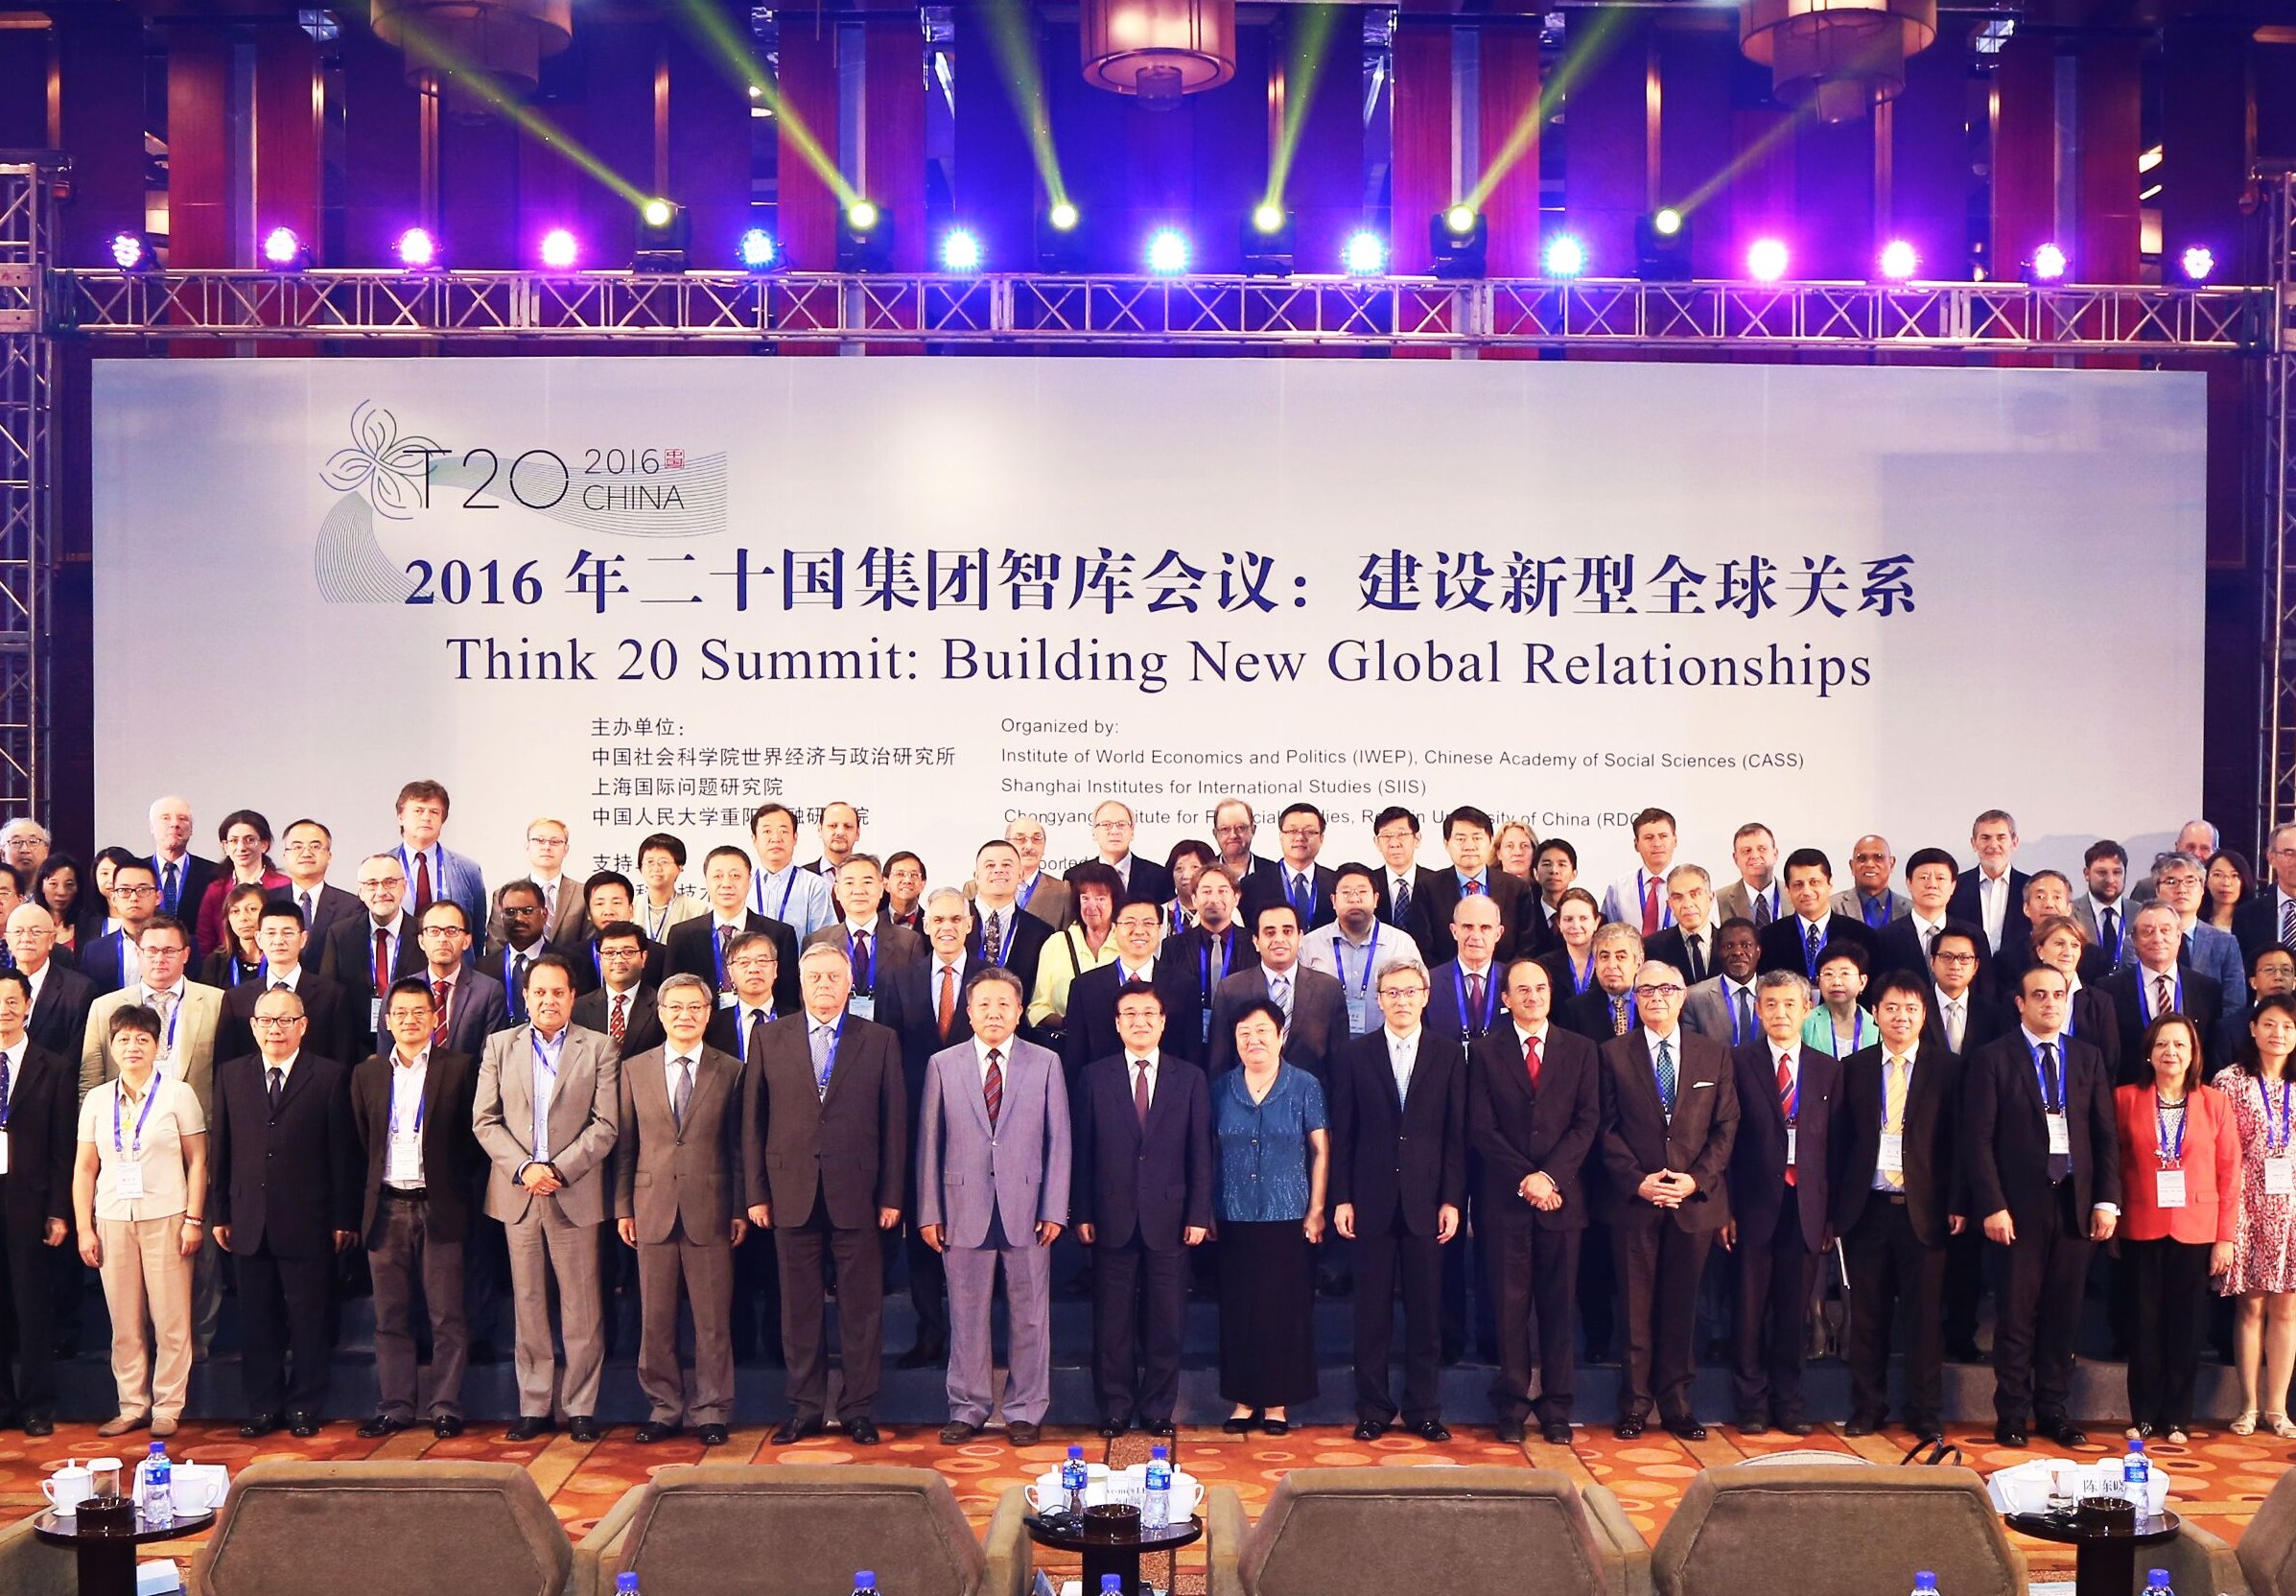 2016 Think 20 Summit held in Beijing